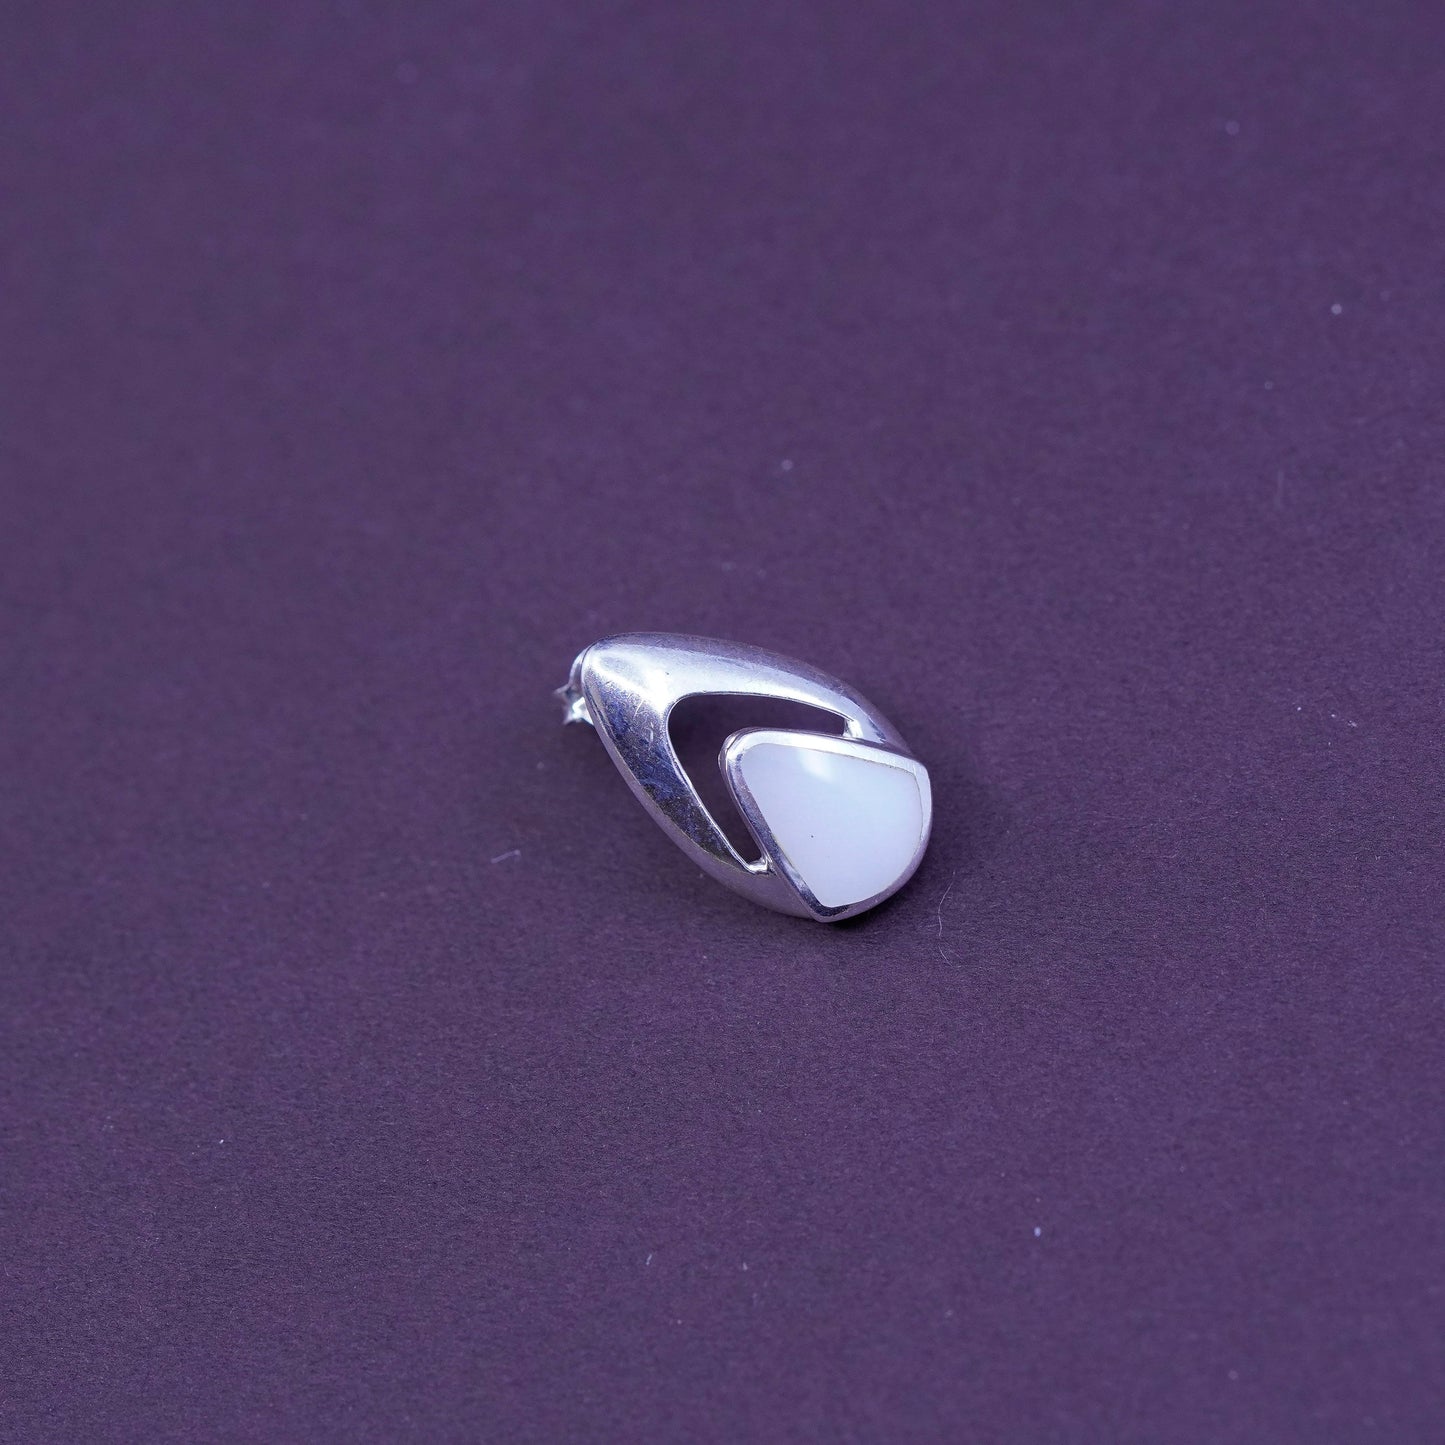 vtg Sterling silver handmade earrings. 925 teardrop studs with mother of pearl